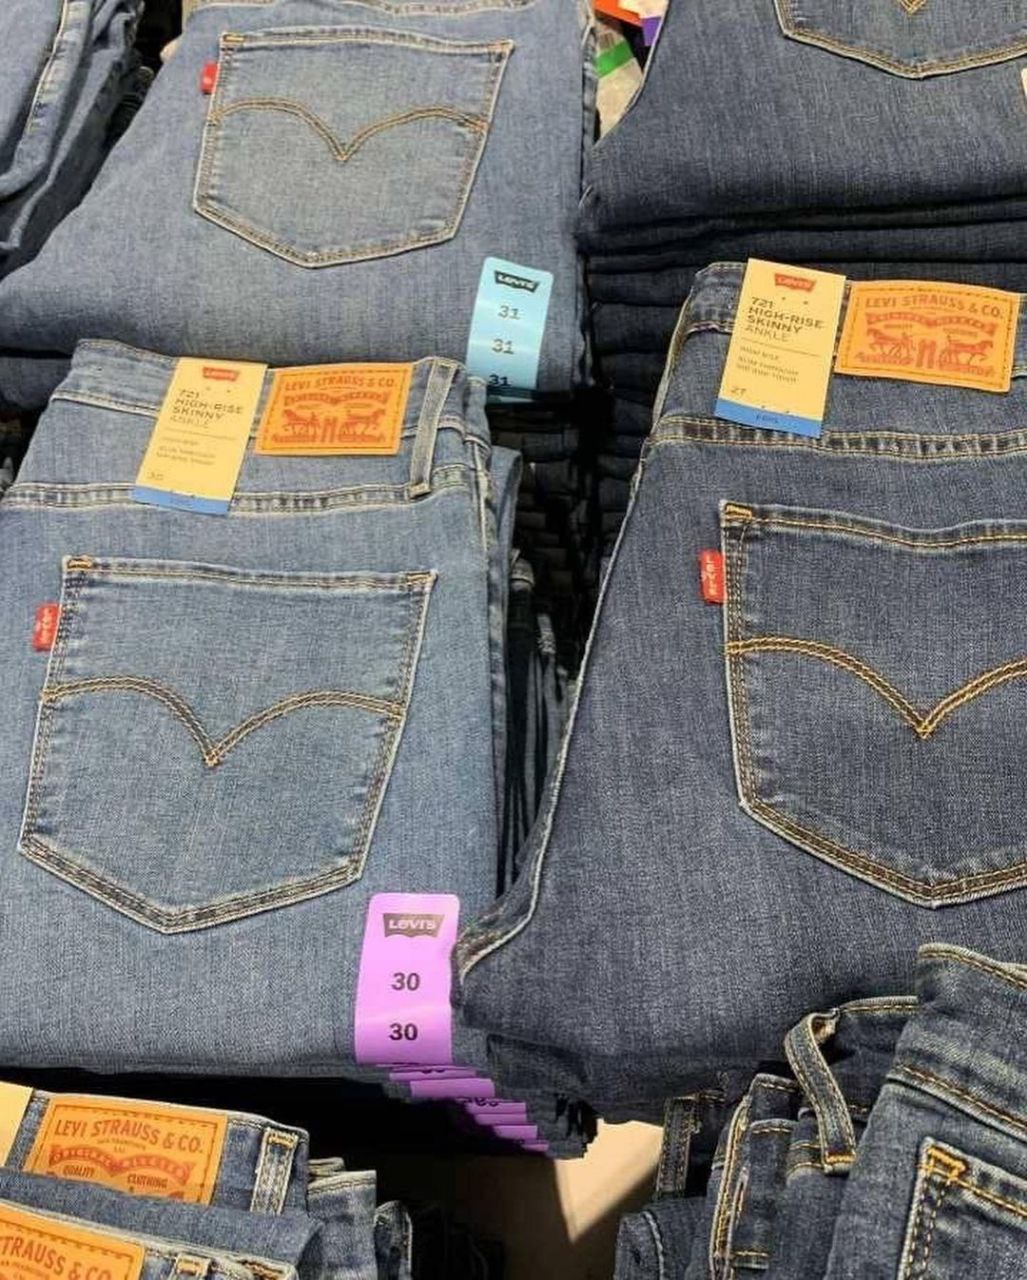 Buy Authentic Levis Jeans Pallets At Wholesale Prices